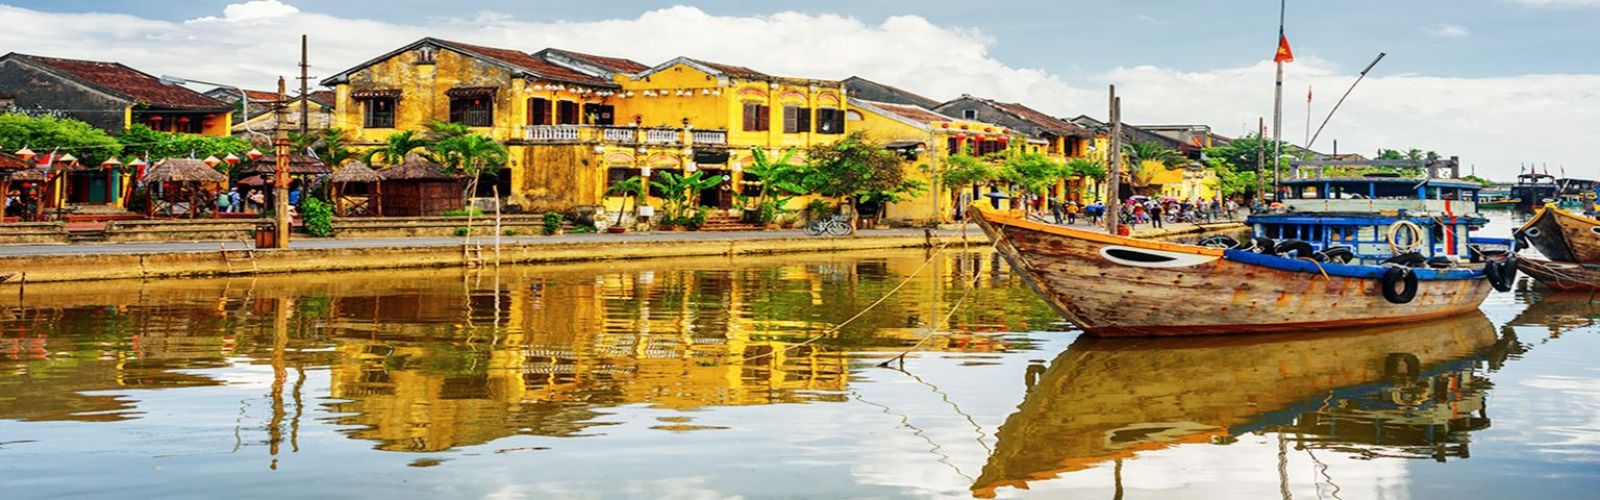 Vietnam Historical Heritage